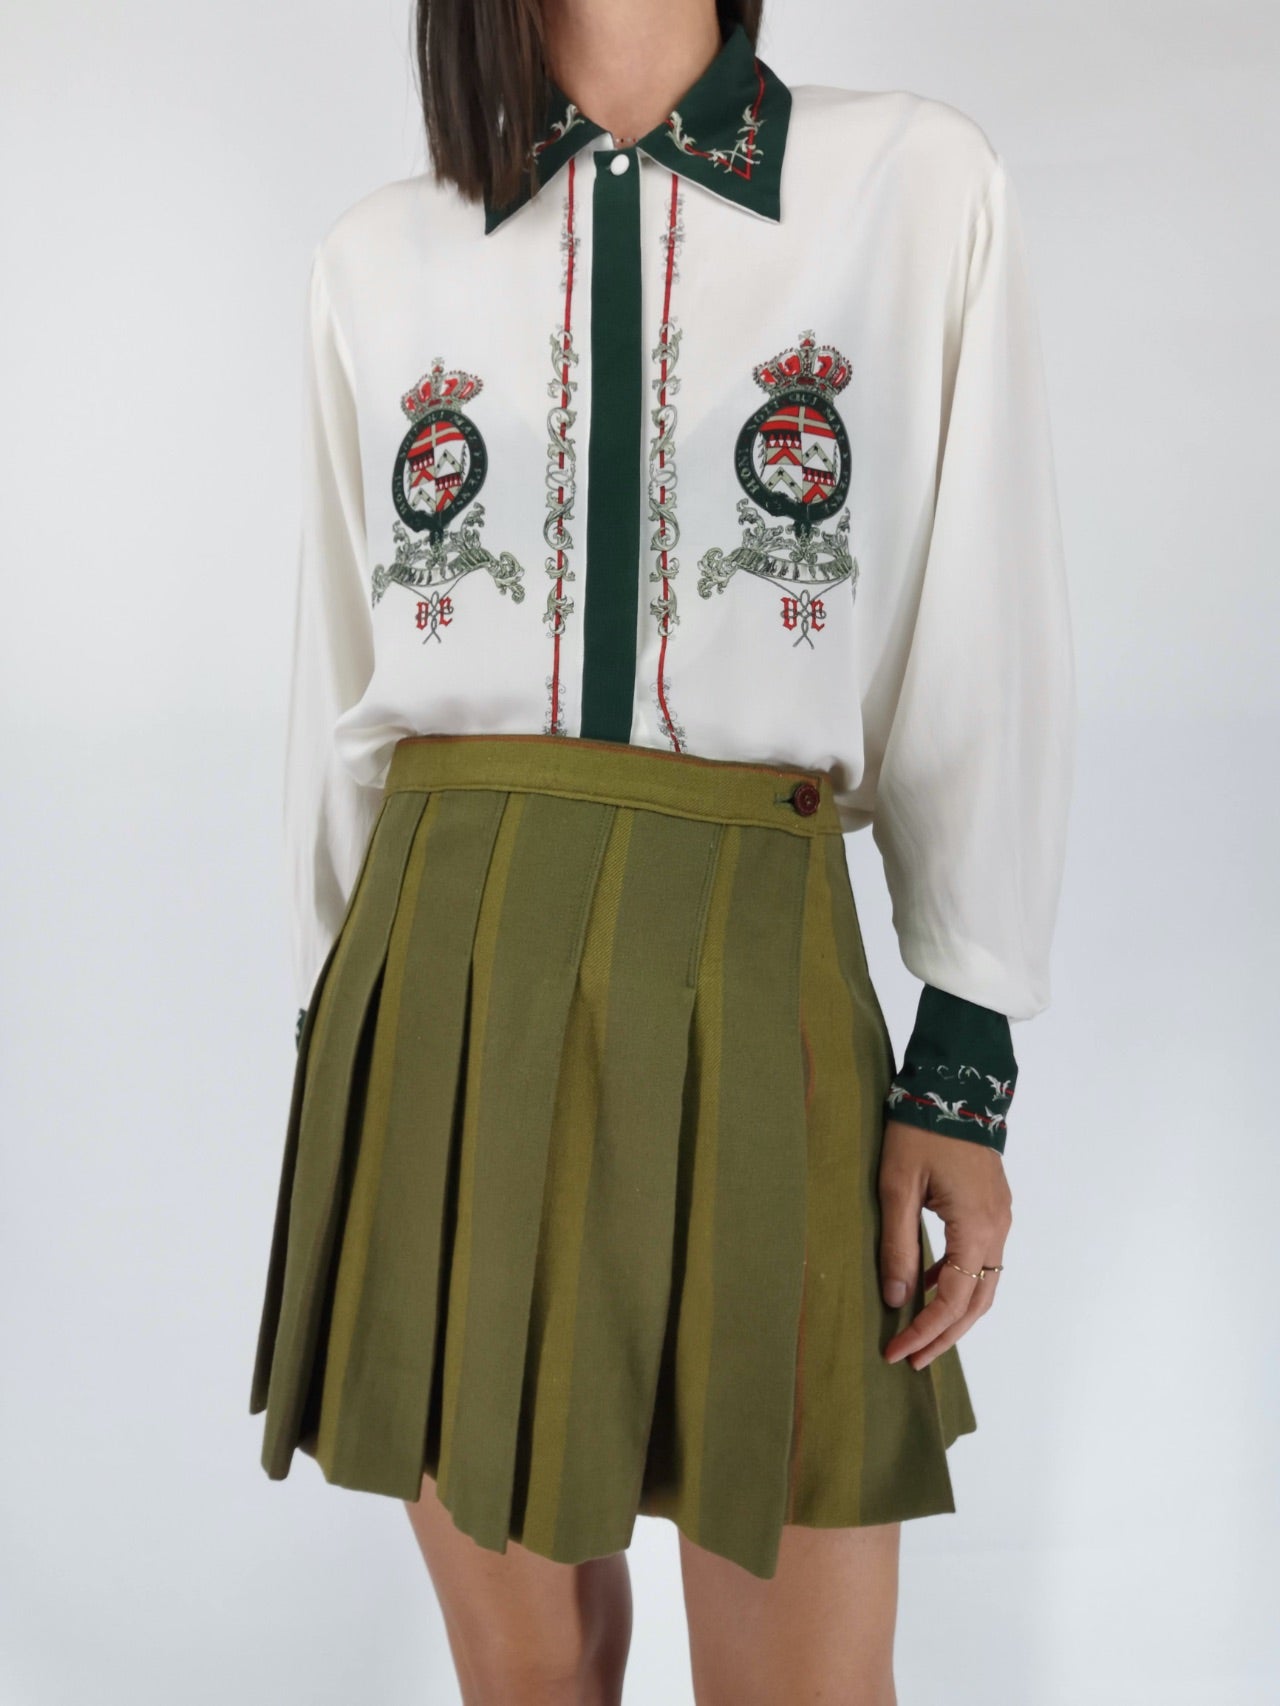 Minifalda Tablas Verde Caqui / College Style / Talla M